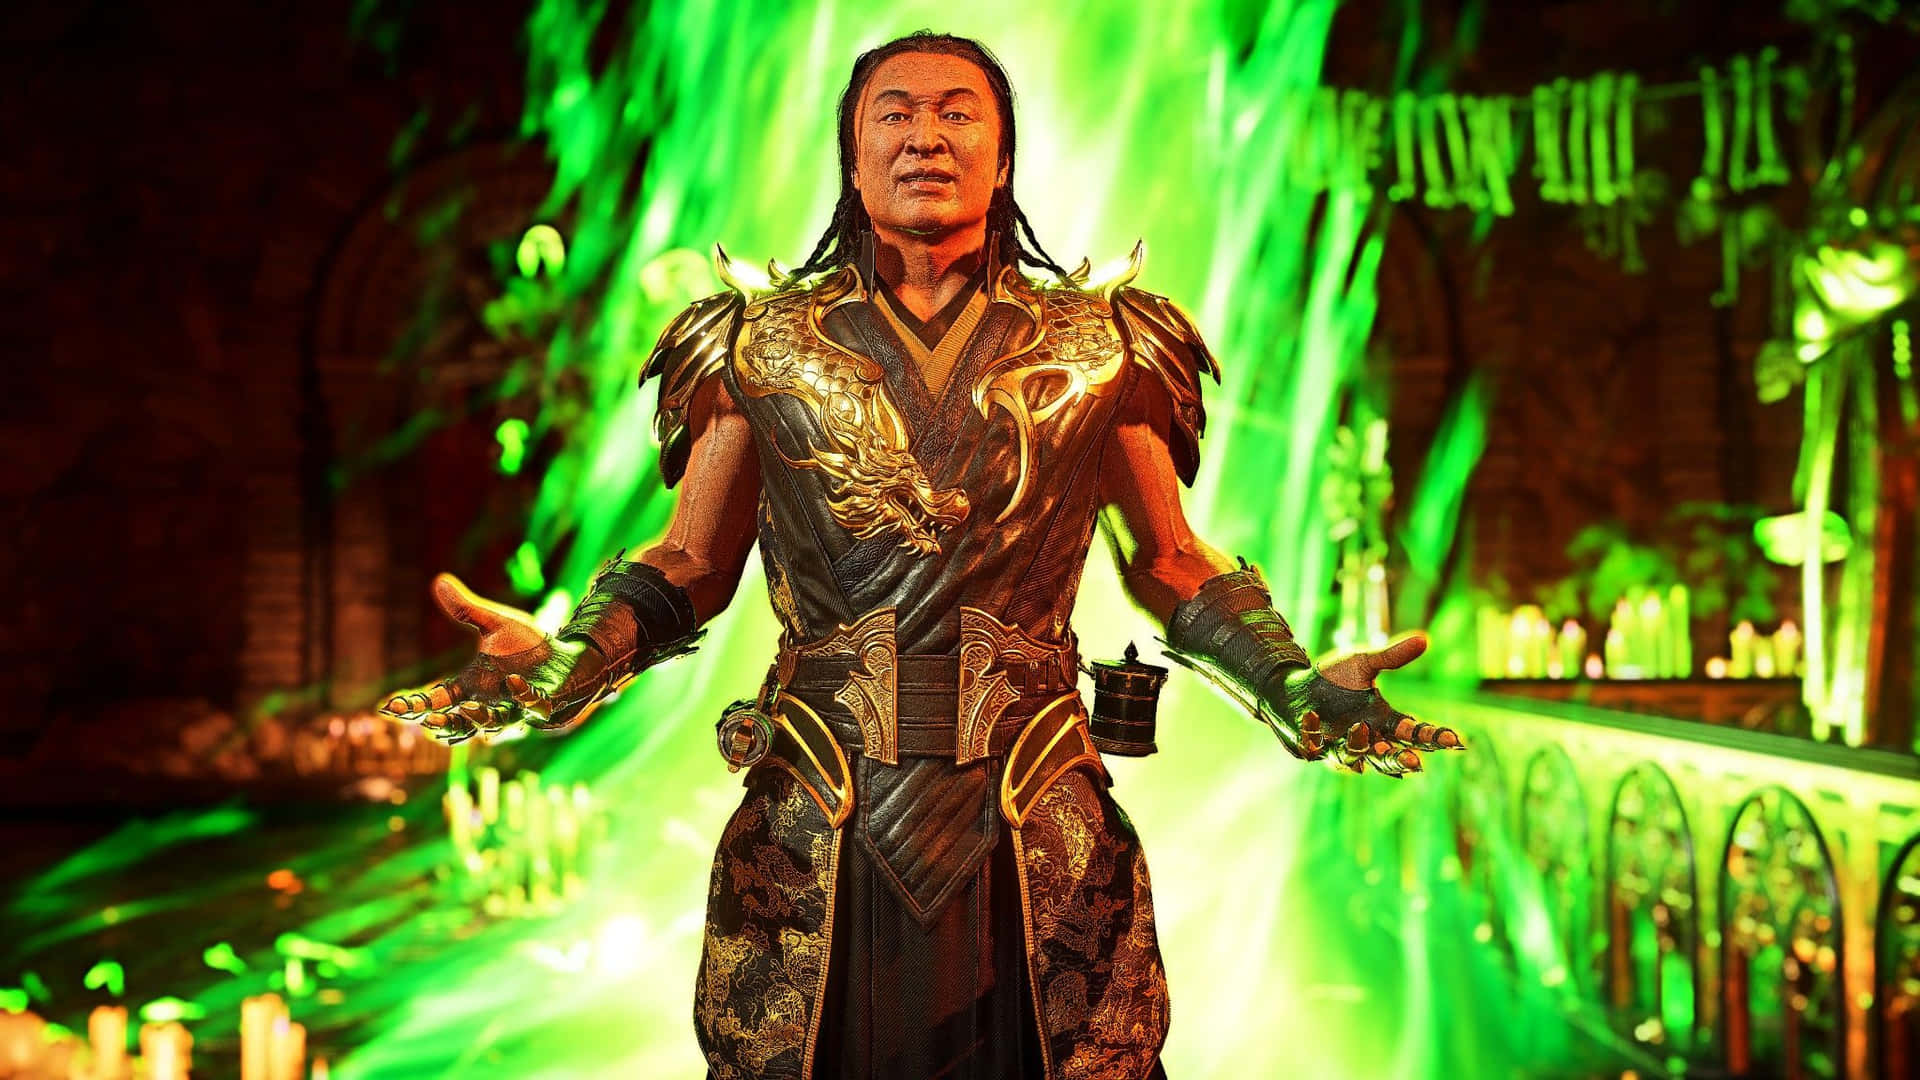 Shang Tsung, the powerful sorcerer of Mortal Kombat, casting his spell. Wallpaper